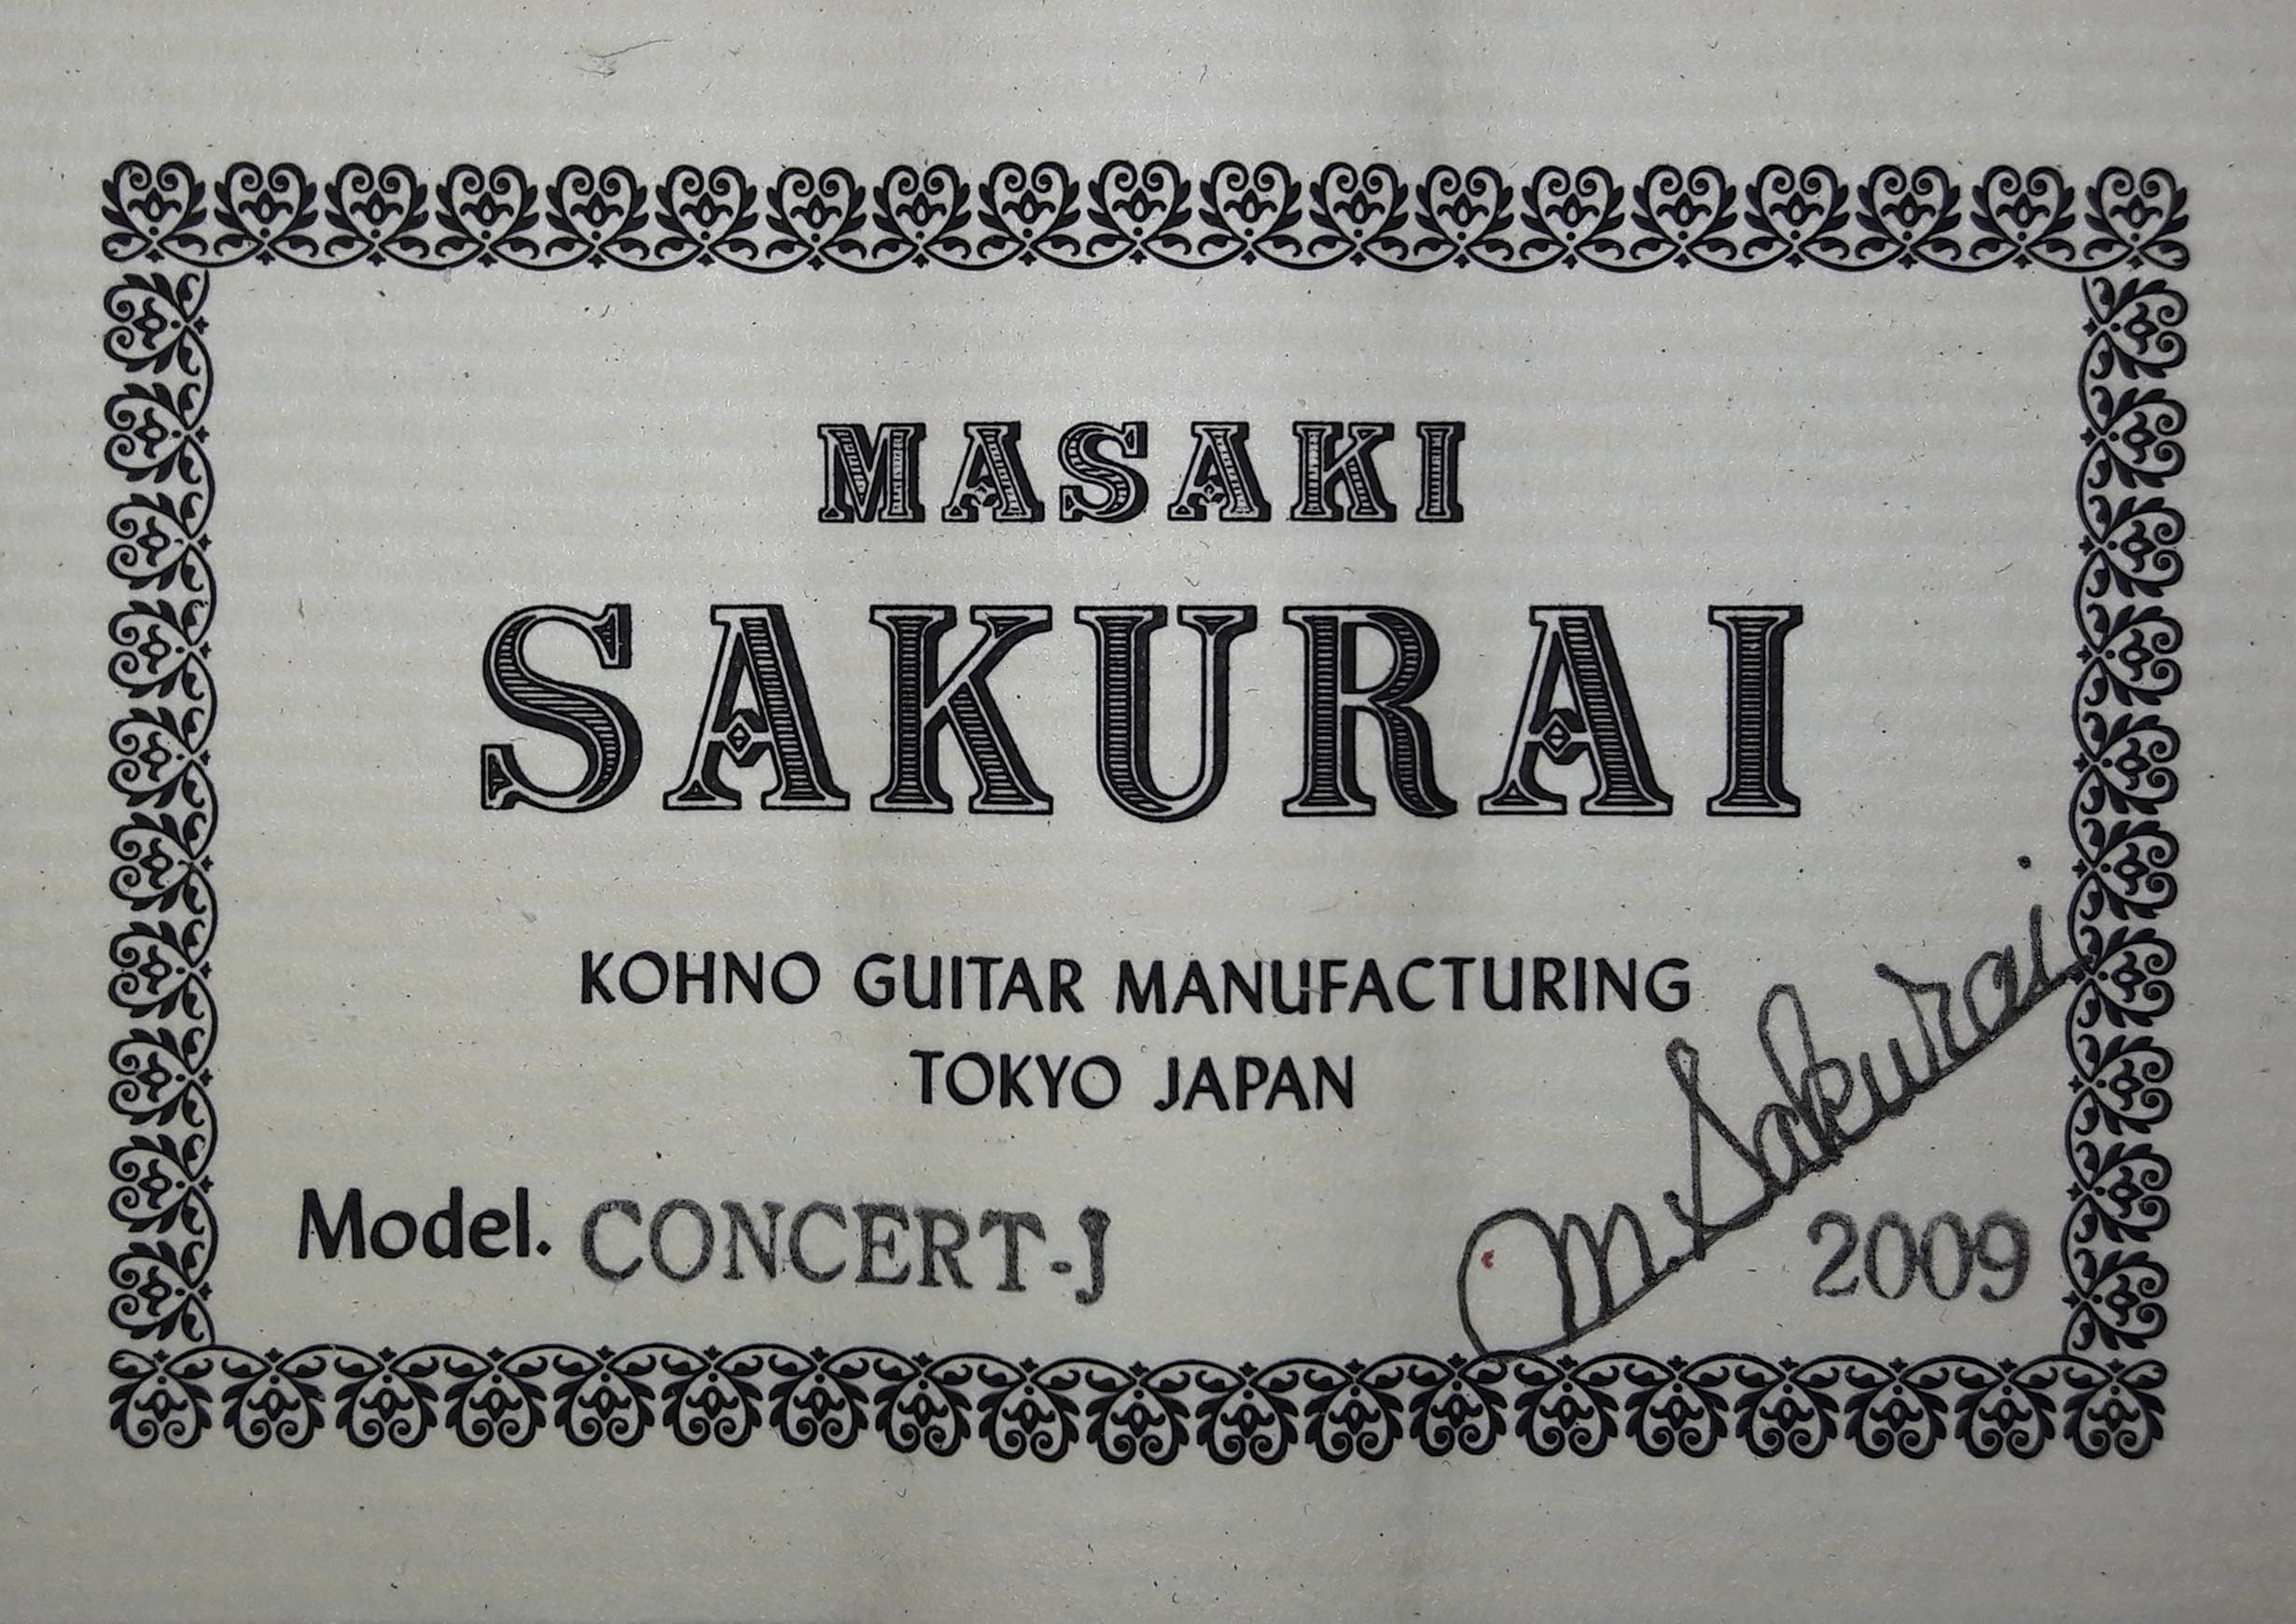 a masaki sakurai 2009 18052018 label